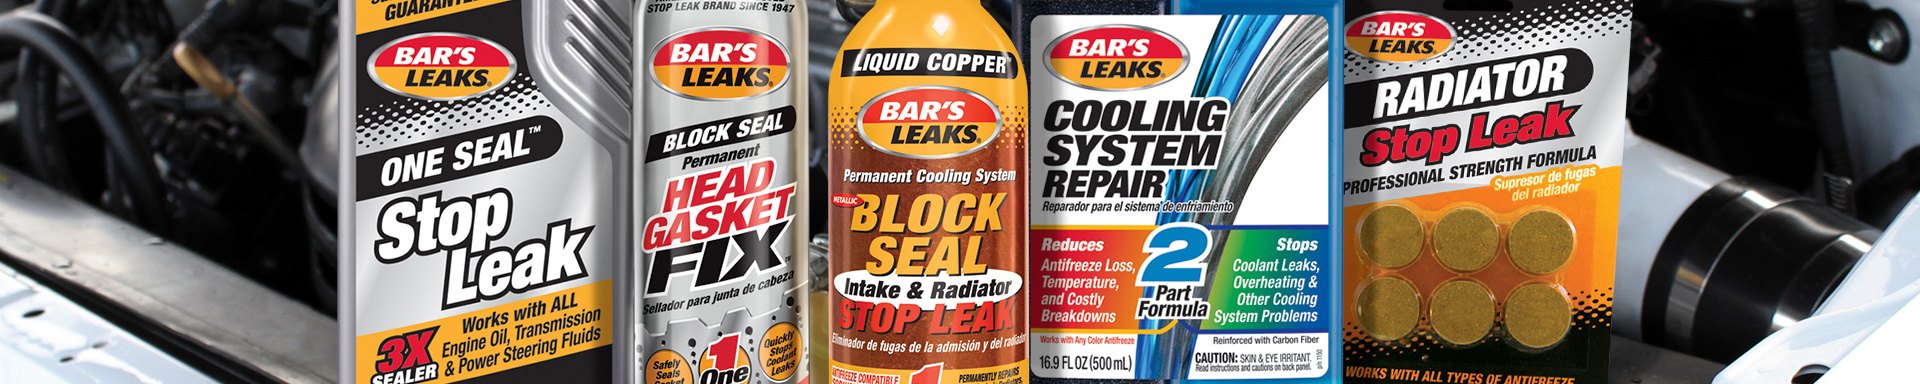 Bar's Leaks Oils, Fluids, Lubricants